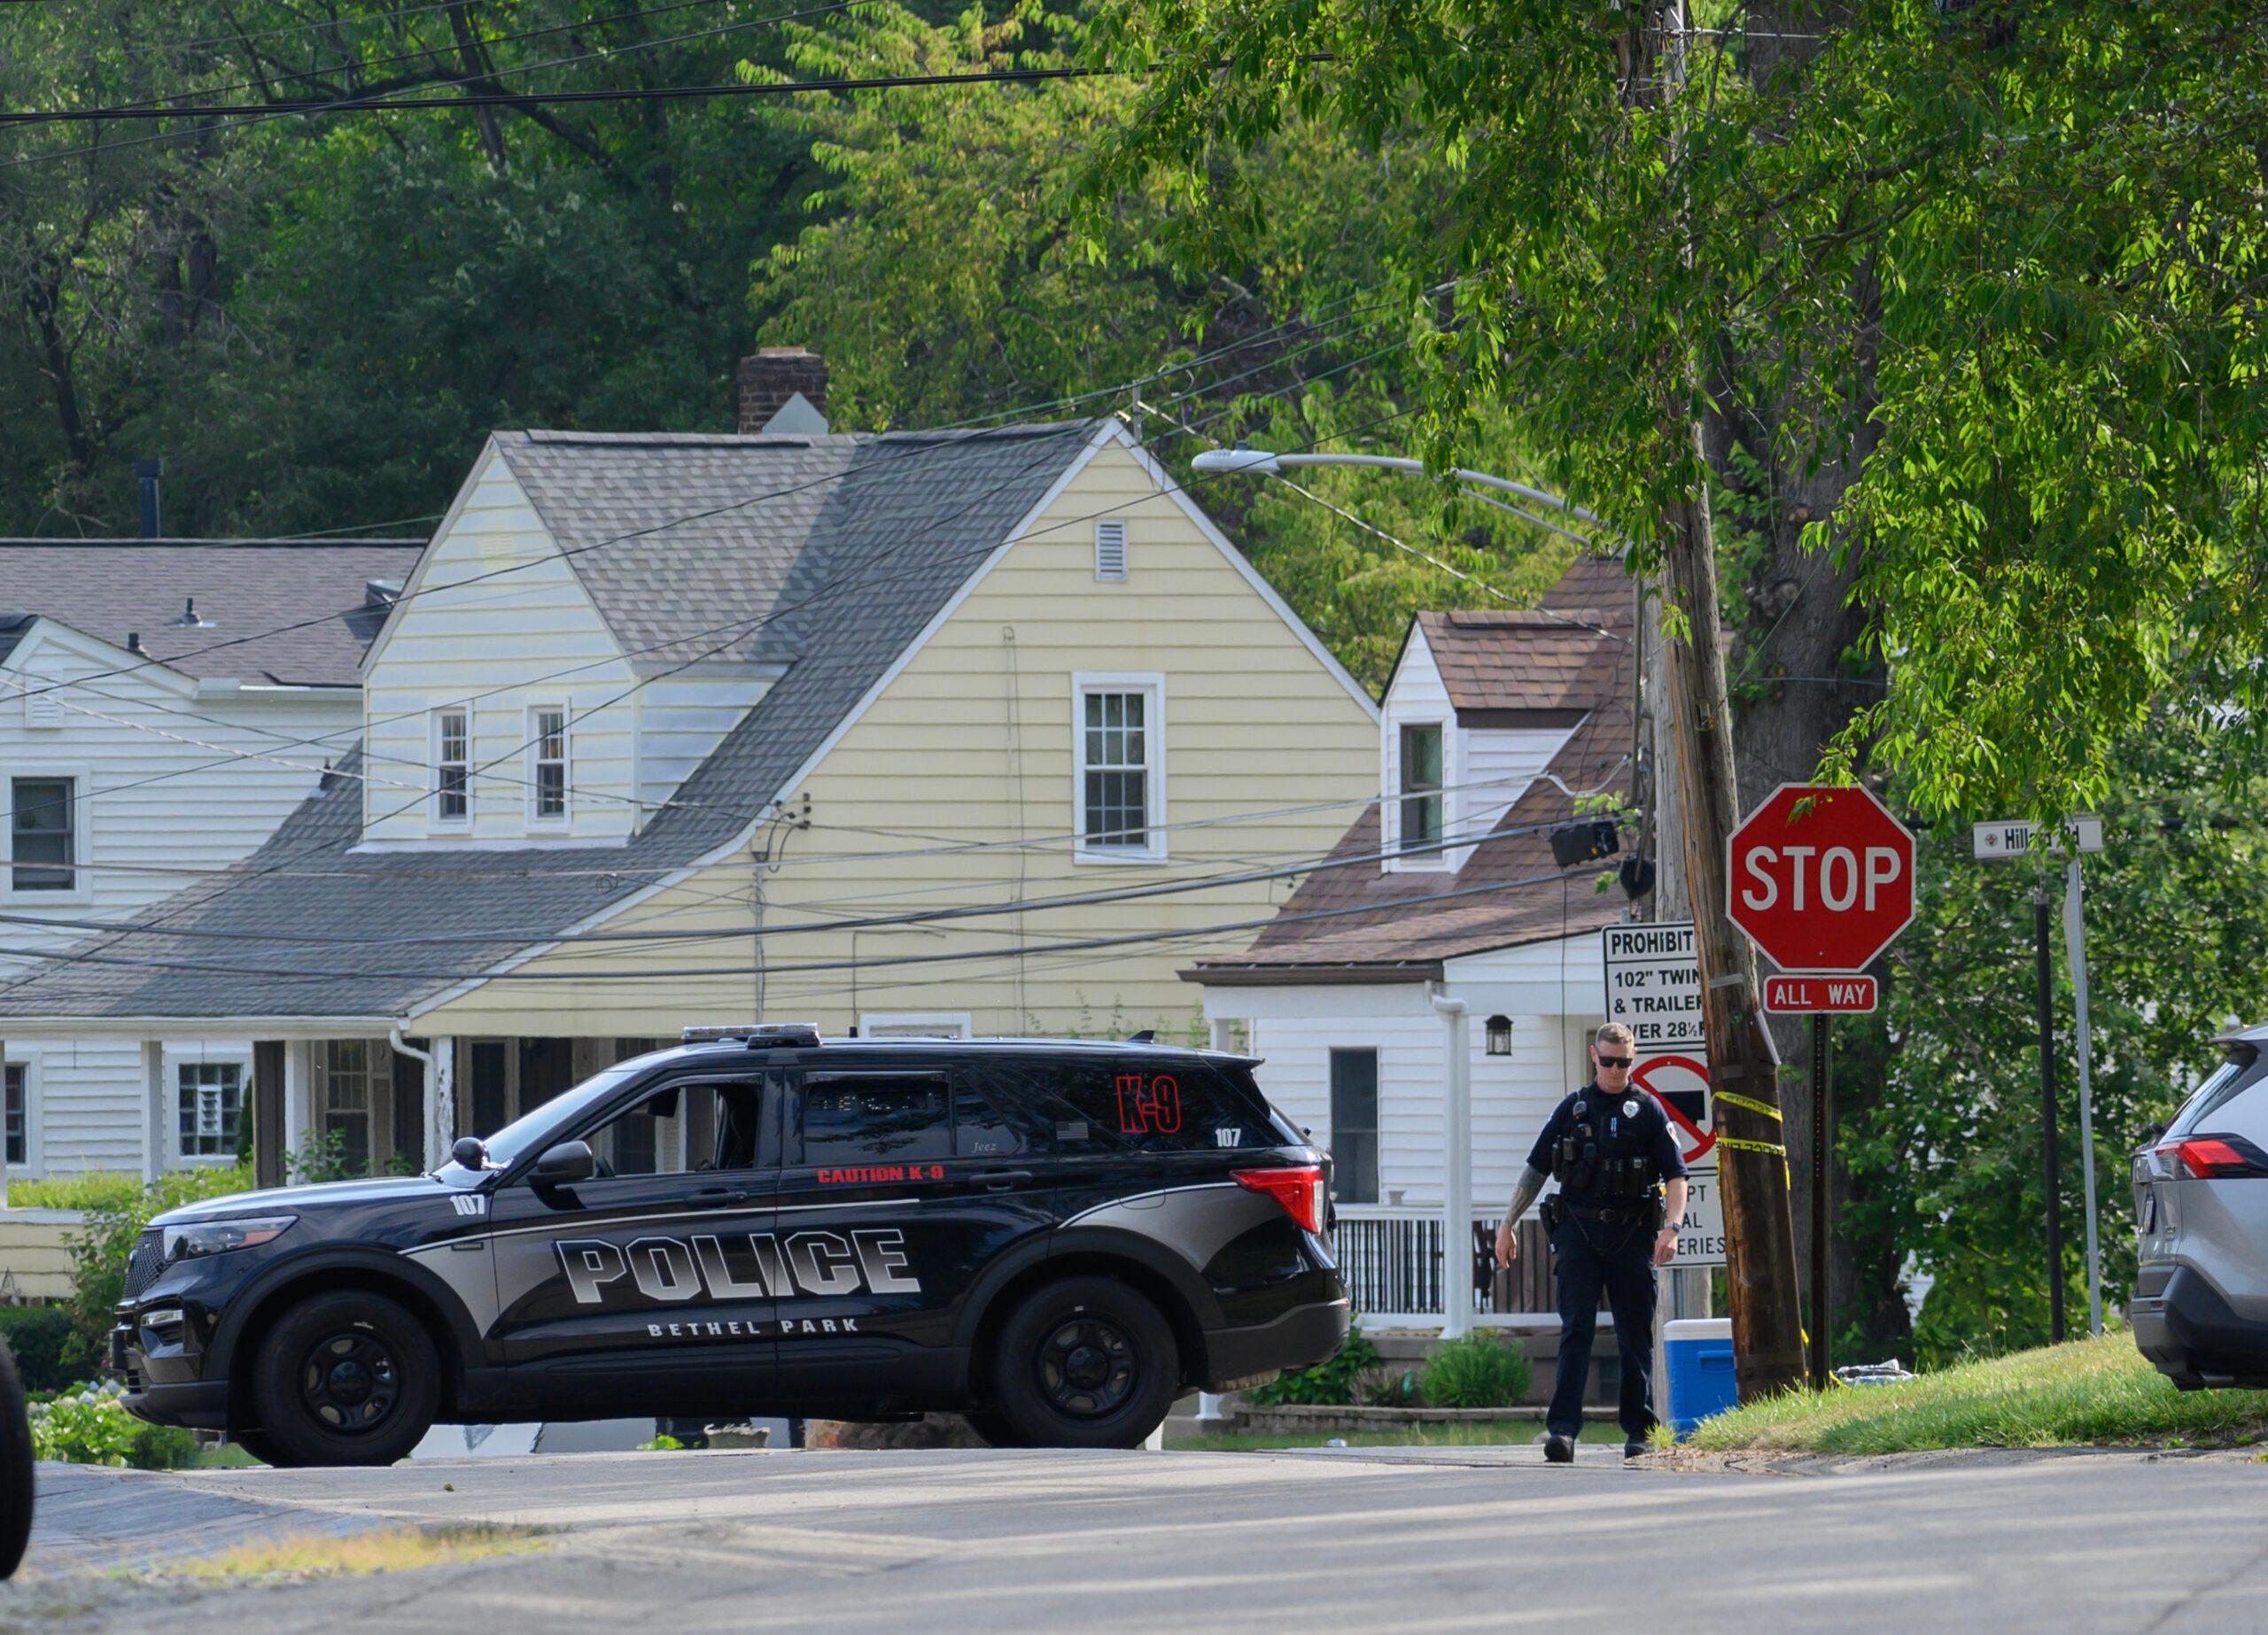 Neighborhood of Thomas Matthew Crook Suspected Shooter of Donald Trump